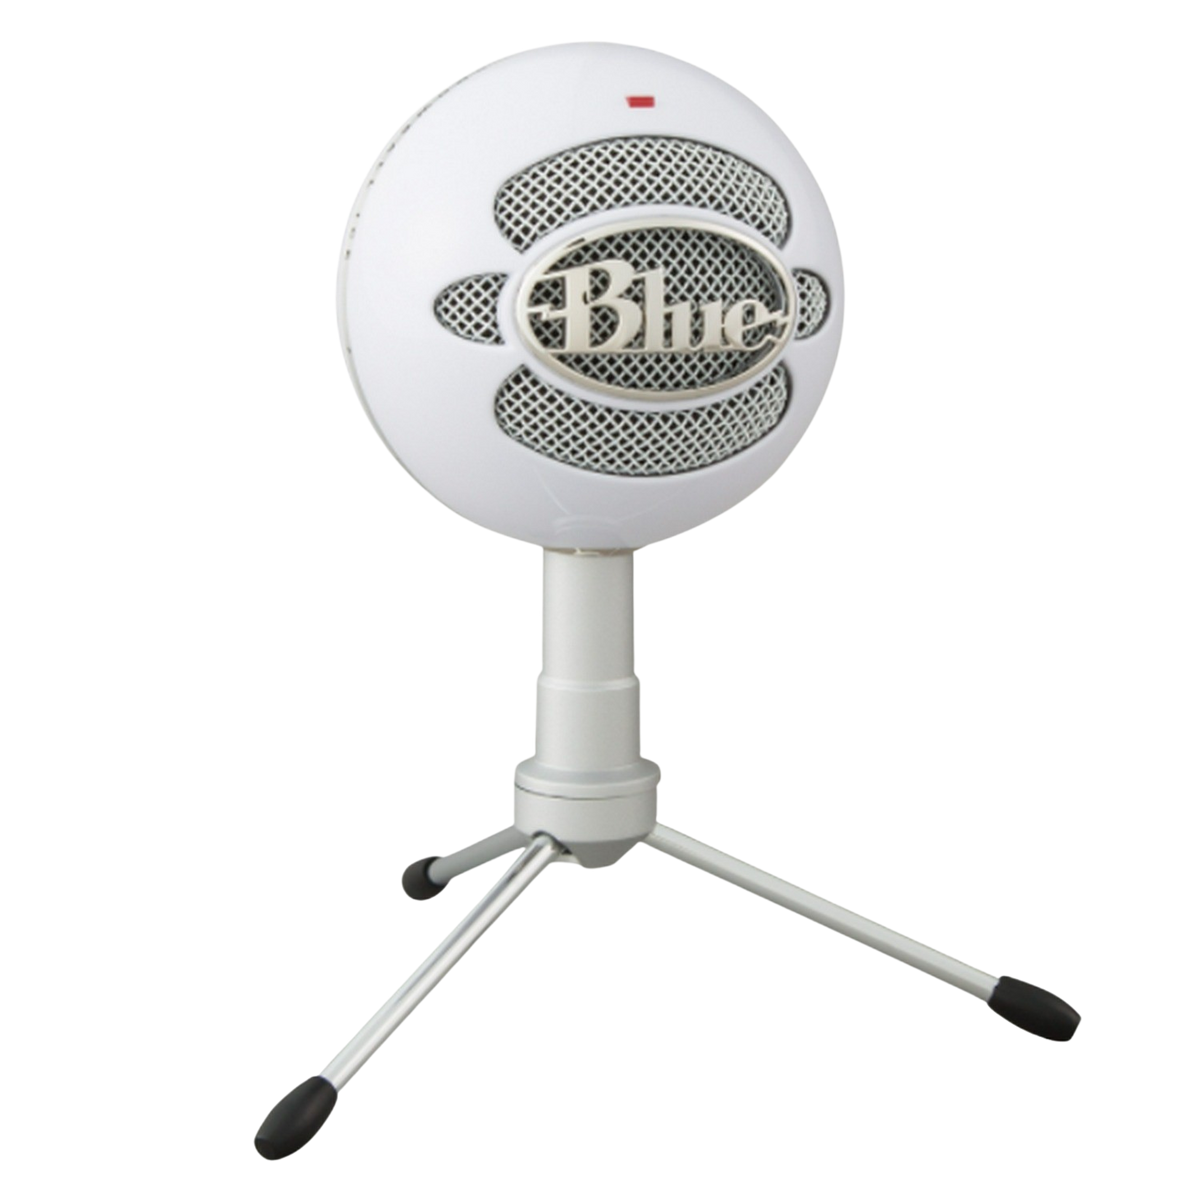 ICE USB 988-000181 SNOWBALL WHITE BLUE Mikrofon, Weiß USB